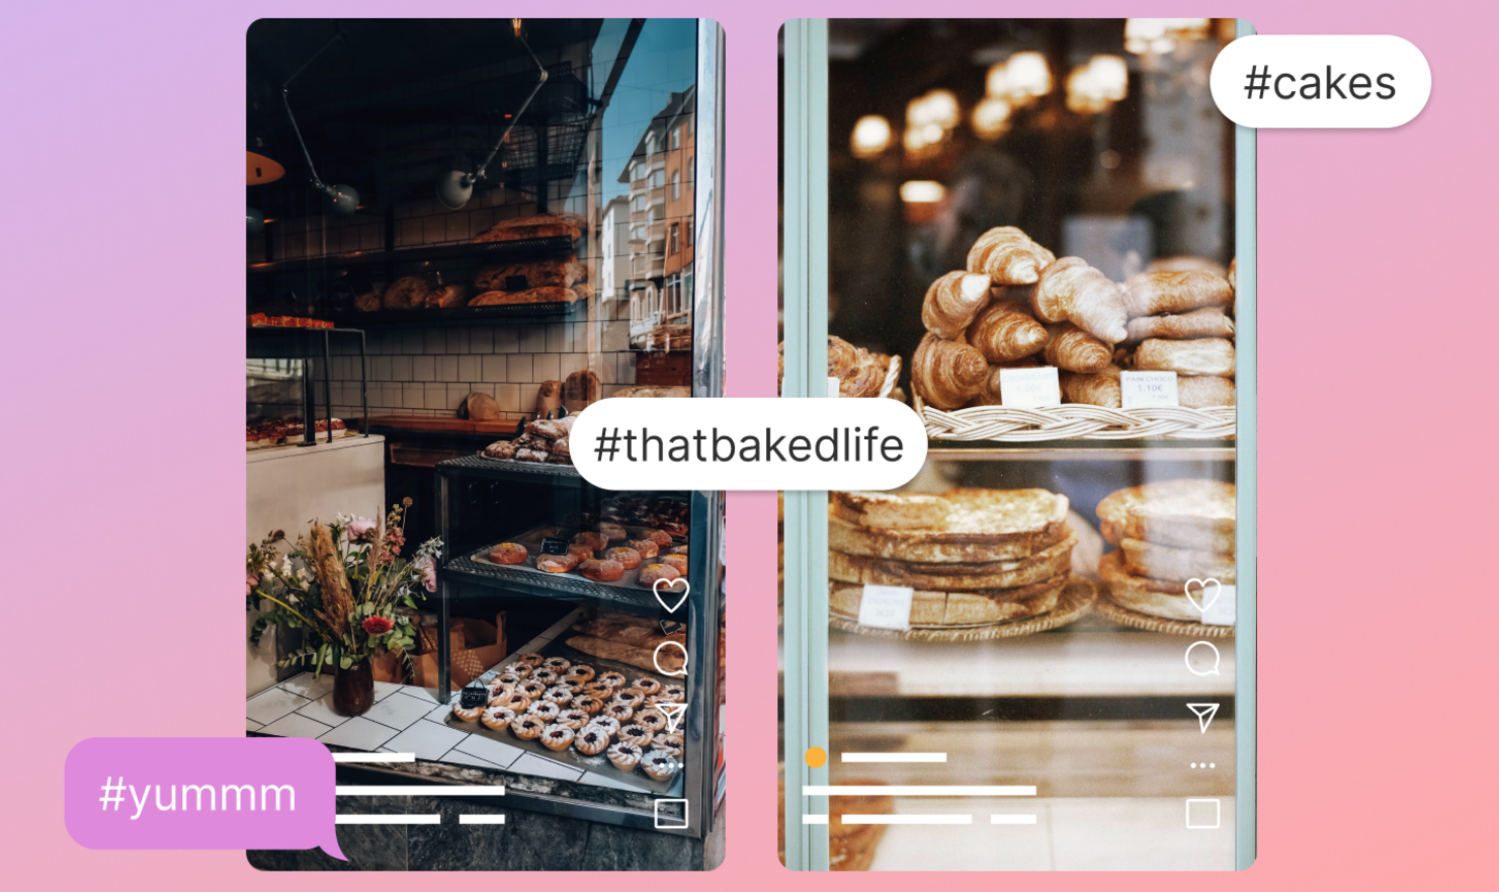 bakery's online presence